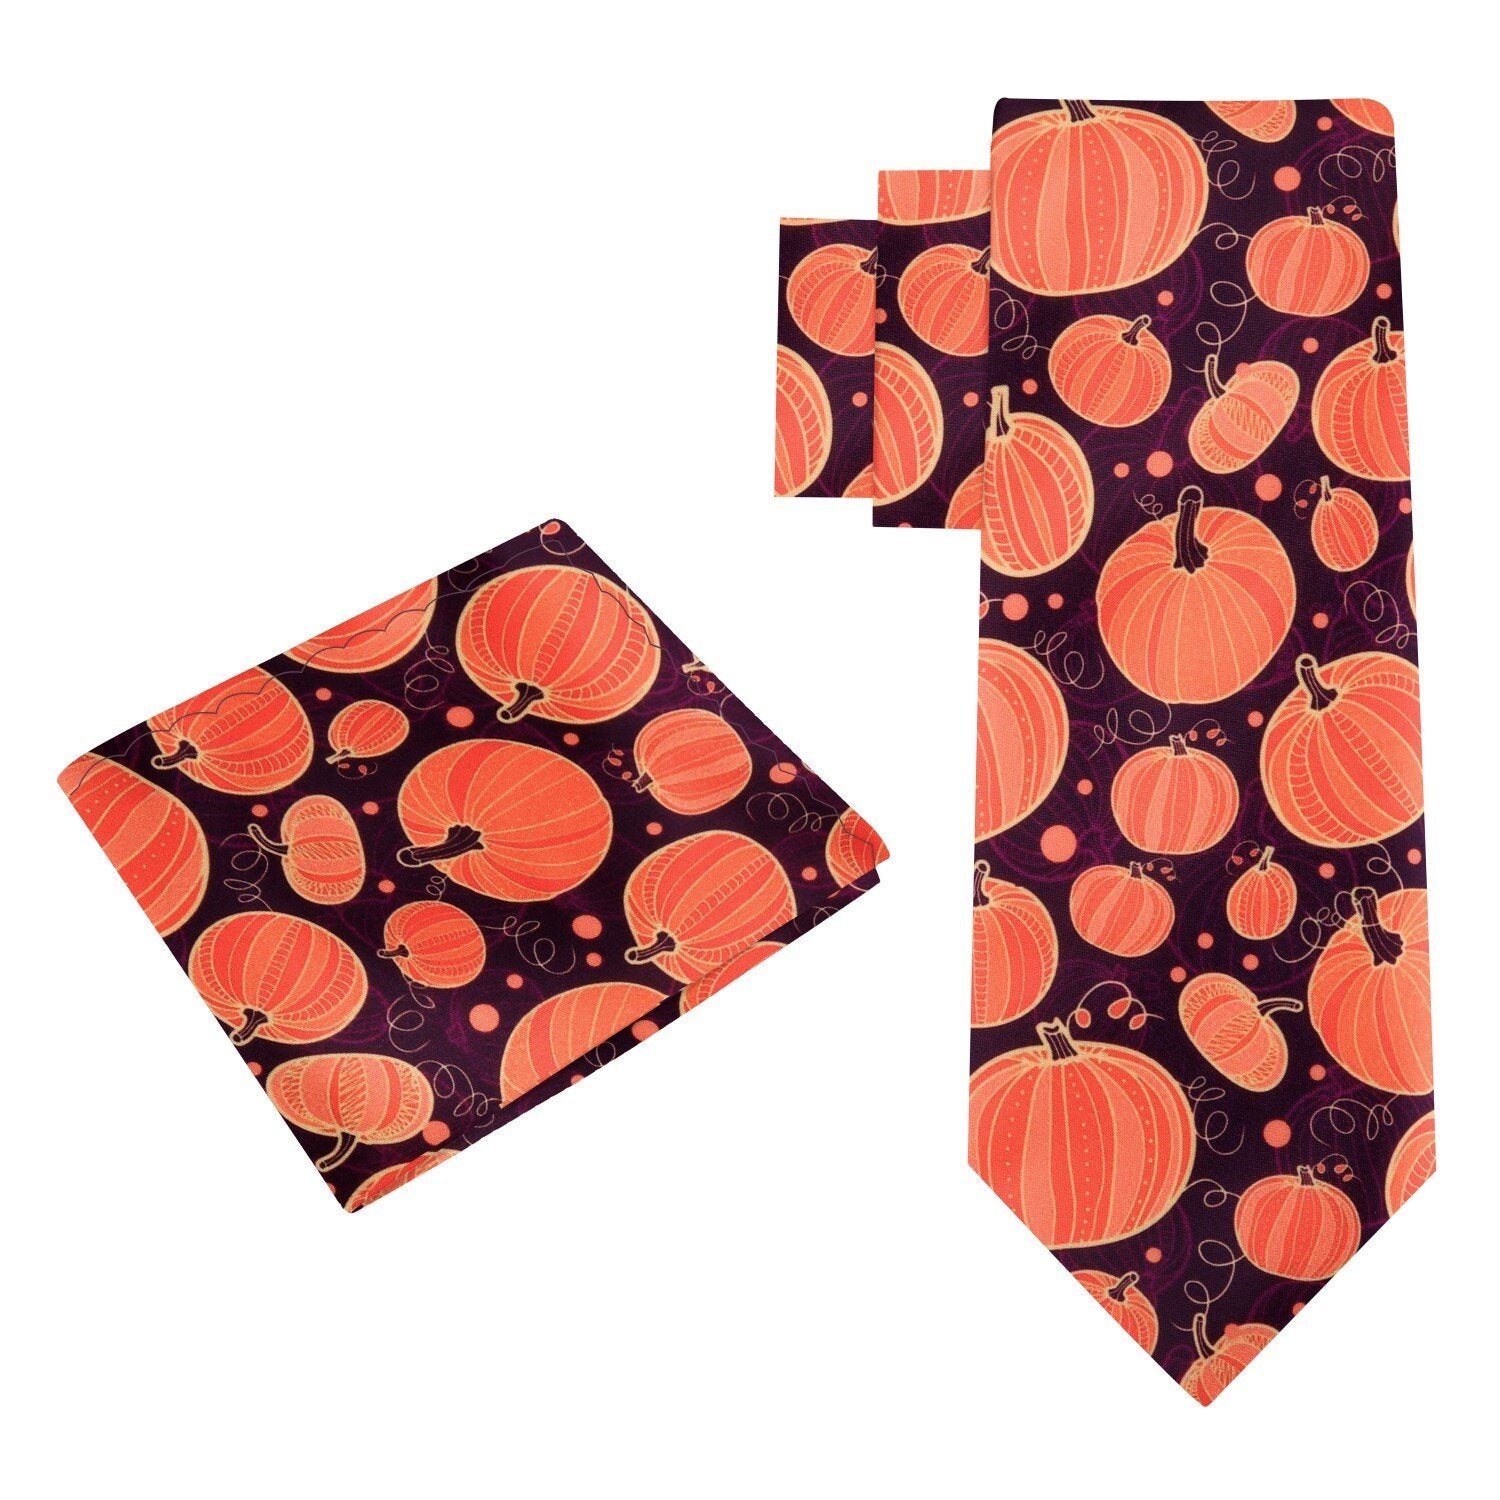 Alt View: Brown, Orange, Purple Large Pumpkins Tie and Square